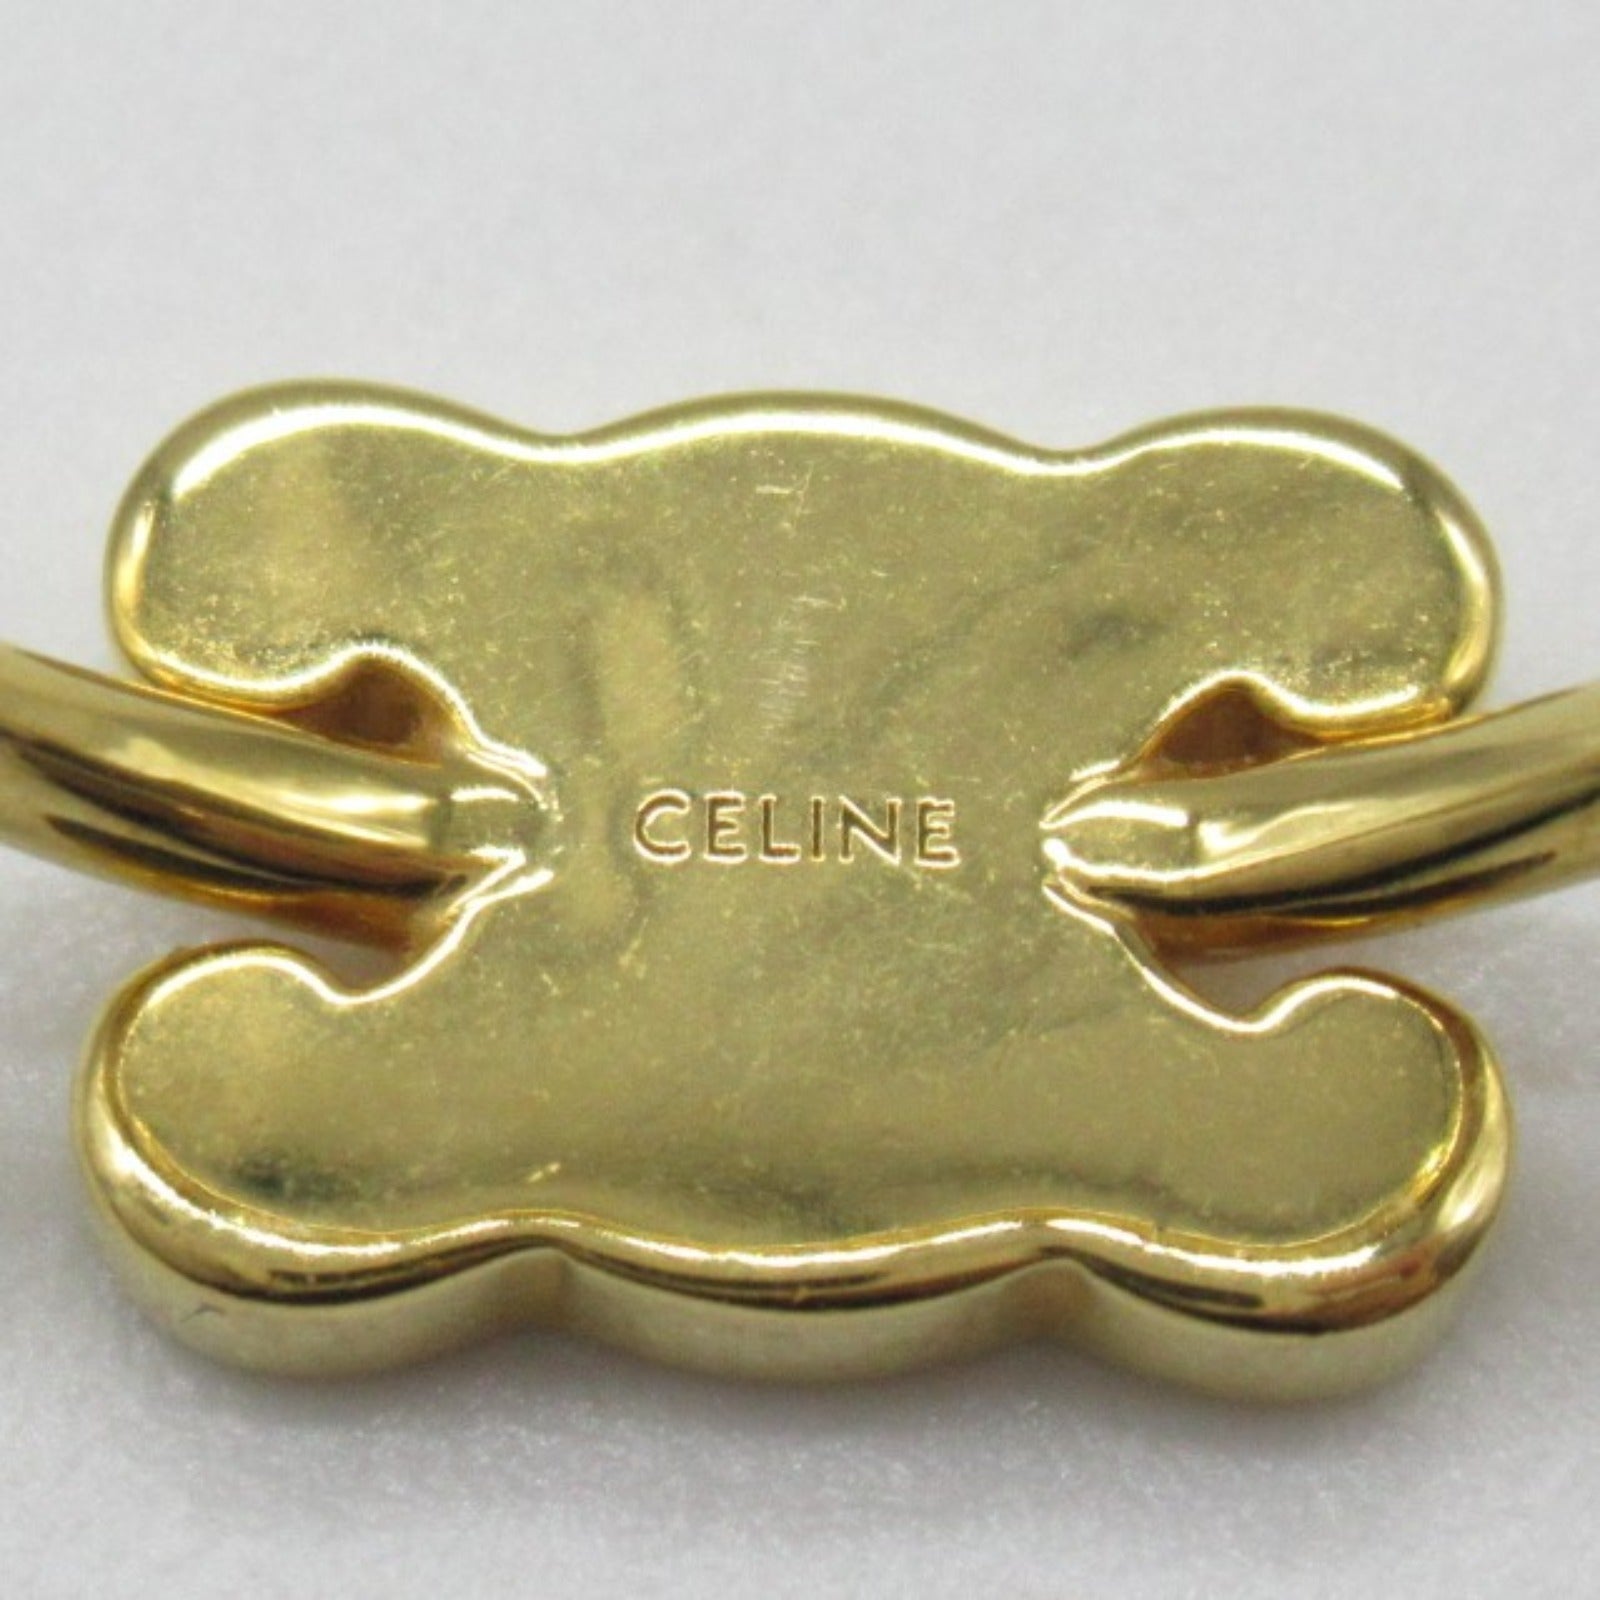 Seline Celine Triumphsmoor Ring Ring Ring Jewelry GP (Gen )  Gold  460MZ6BCZ.35OR